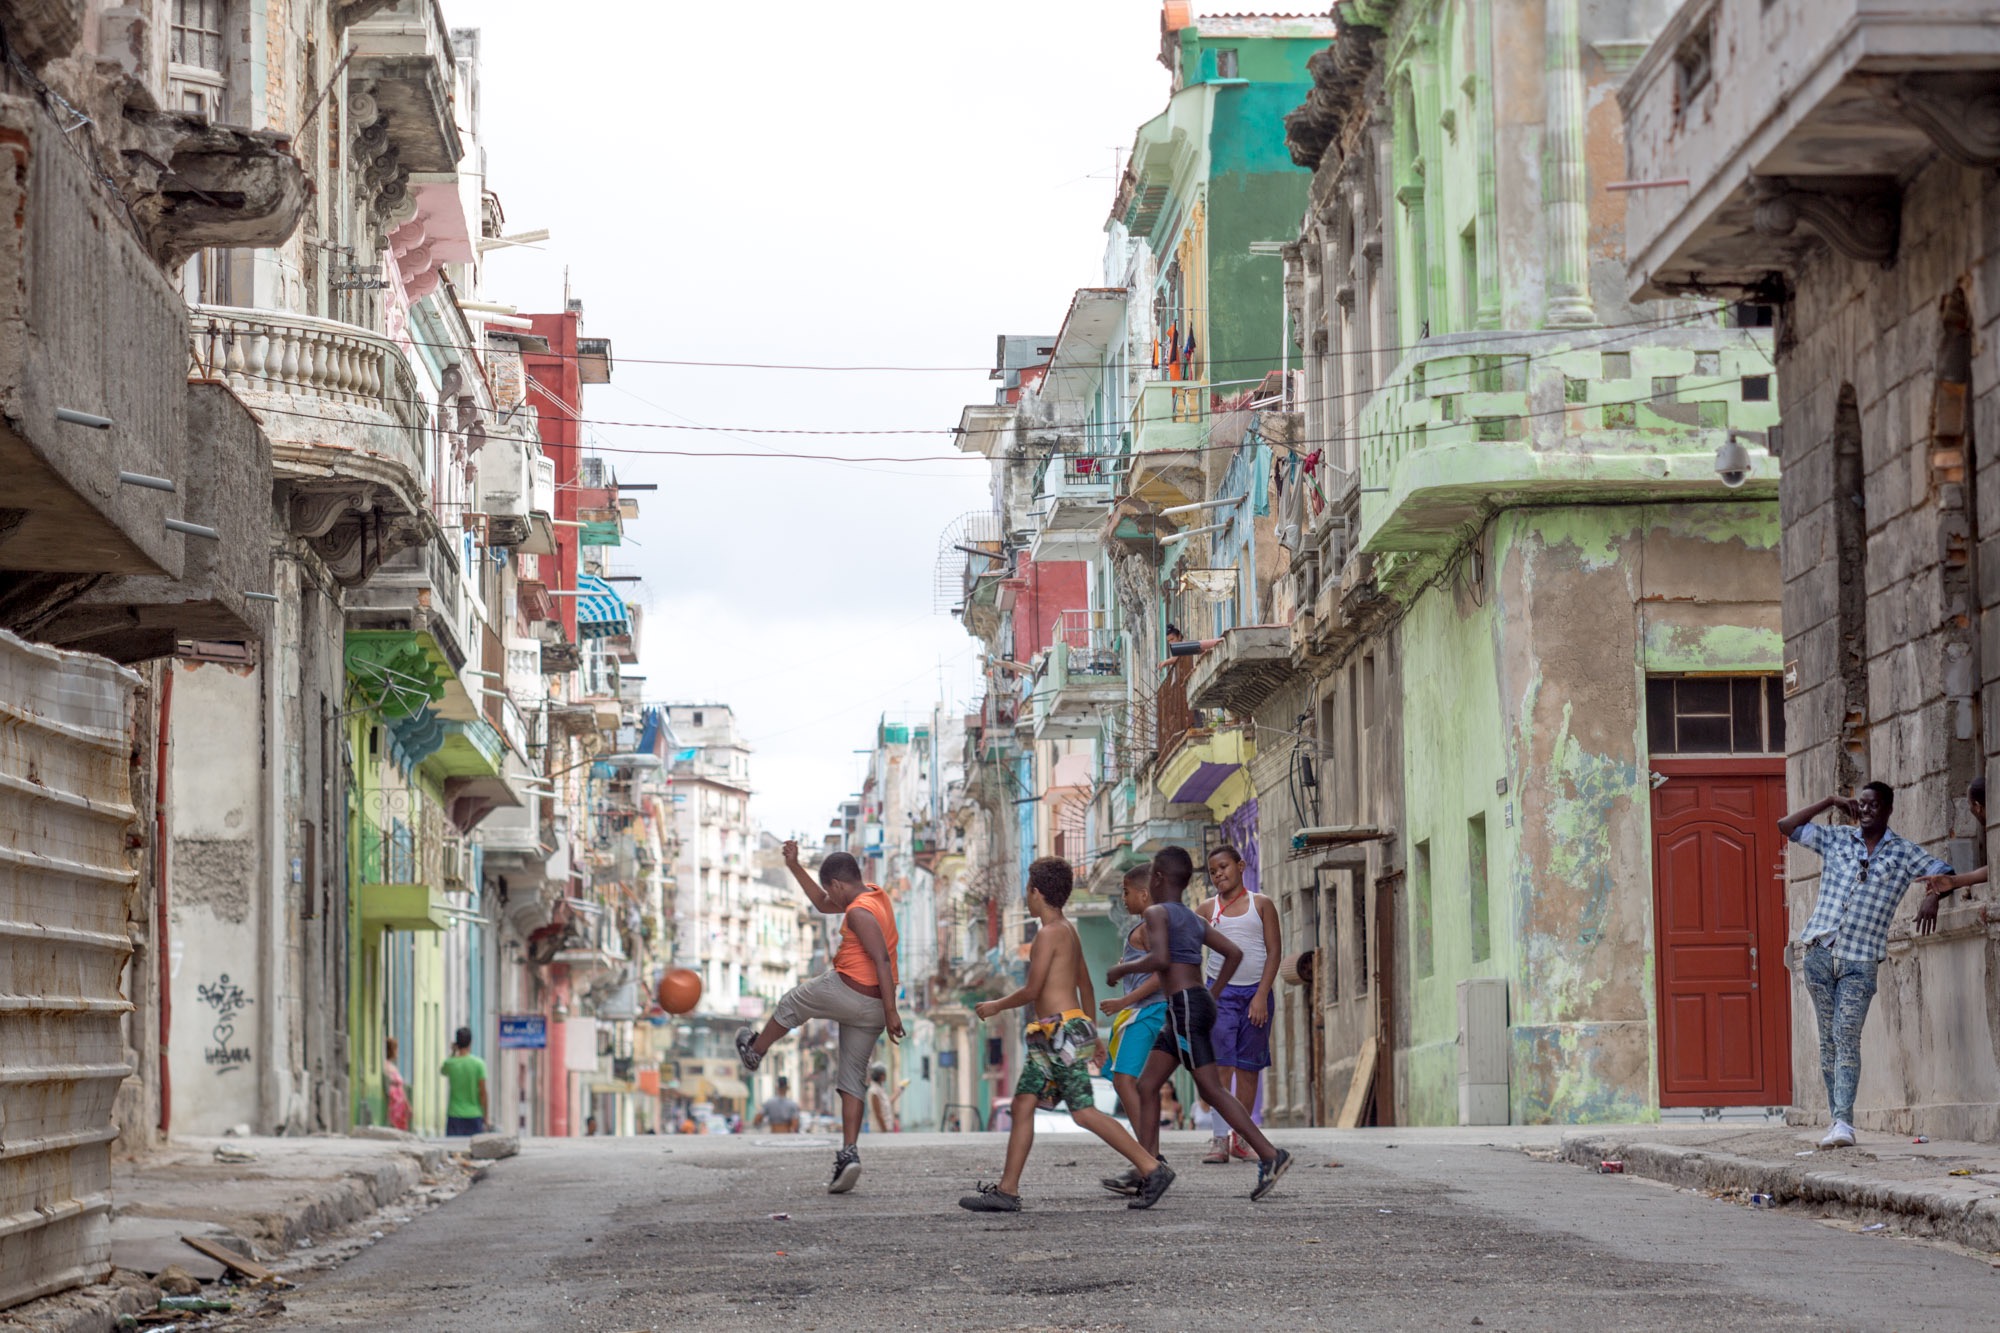 Boys playing soccer on a street in Havana.